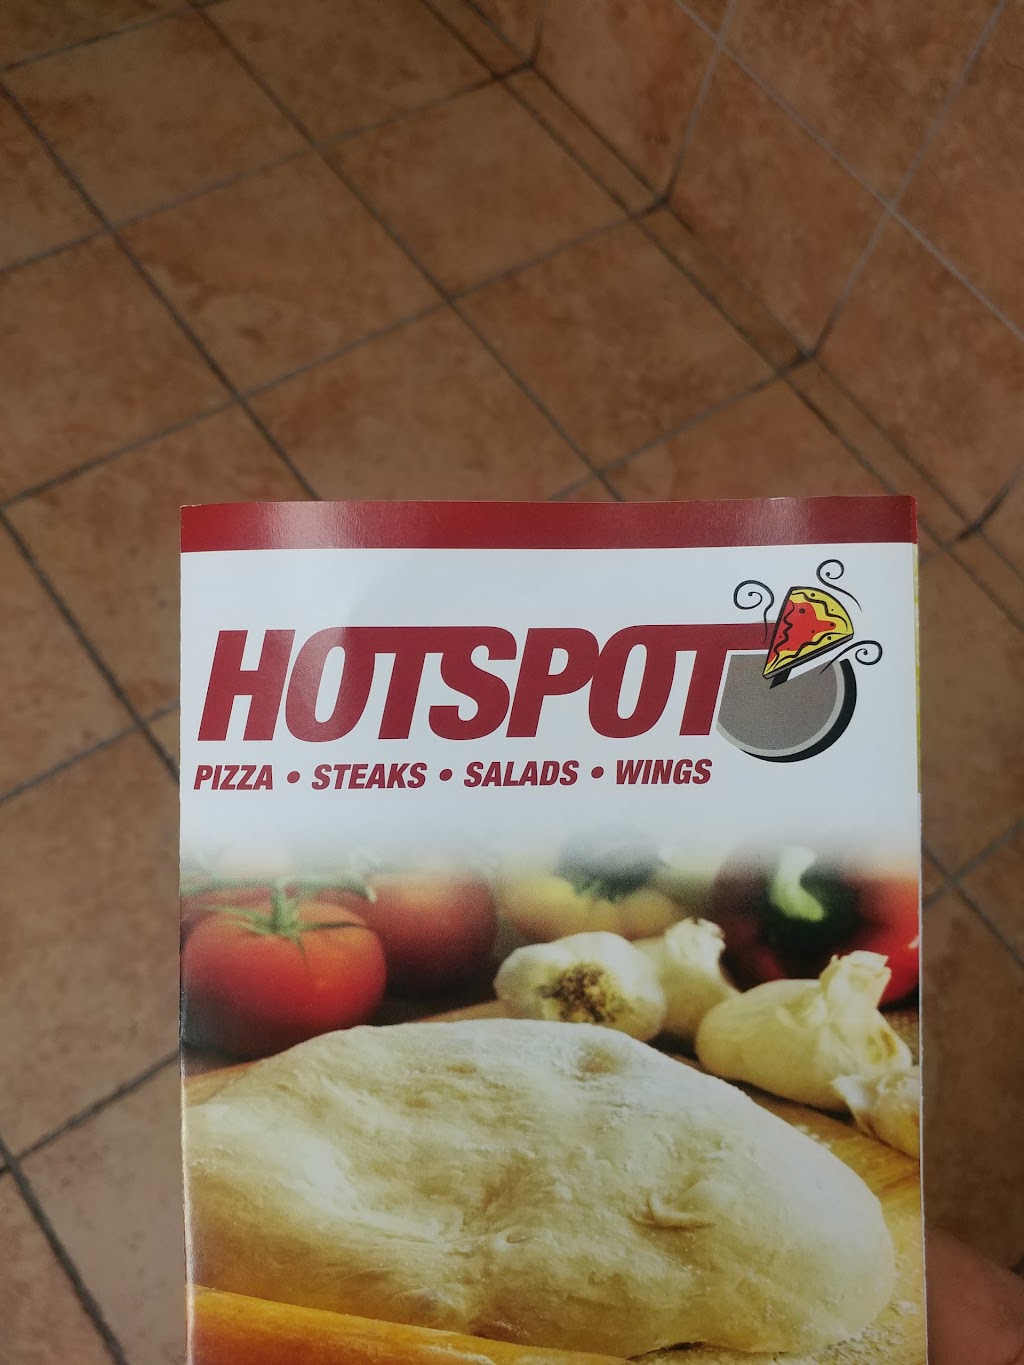 Hot Spot Pizza | 2714 Naamans Rd, Wilmington, DE 19810 | Phone: (302) 375-6646